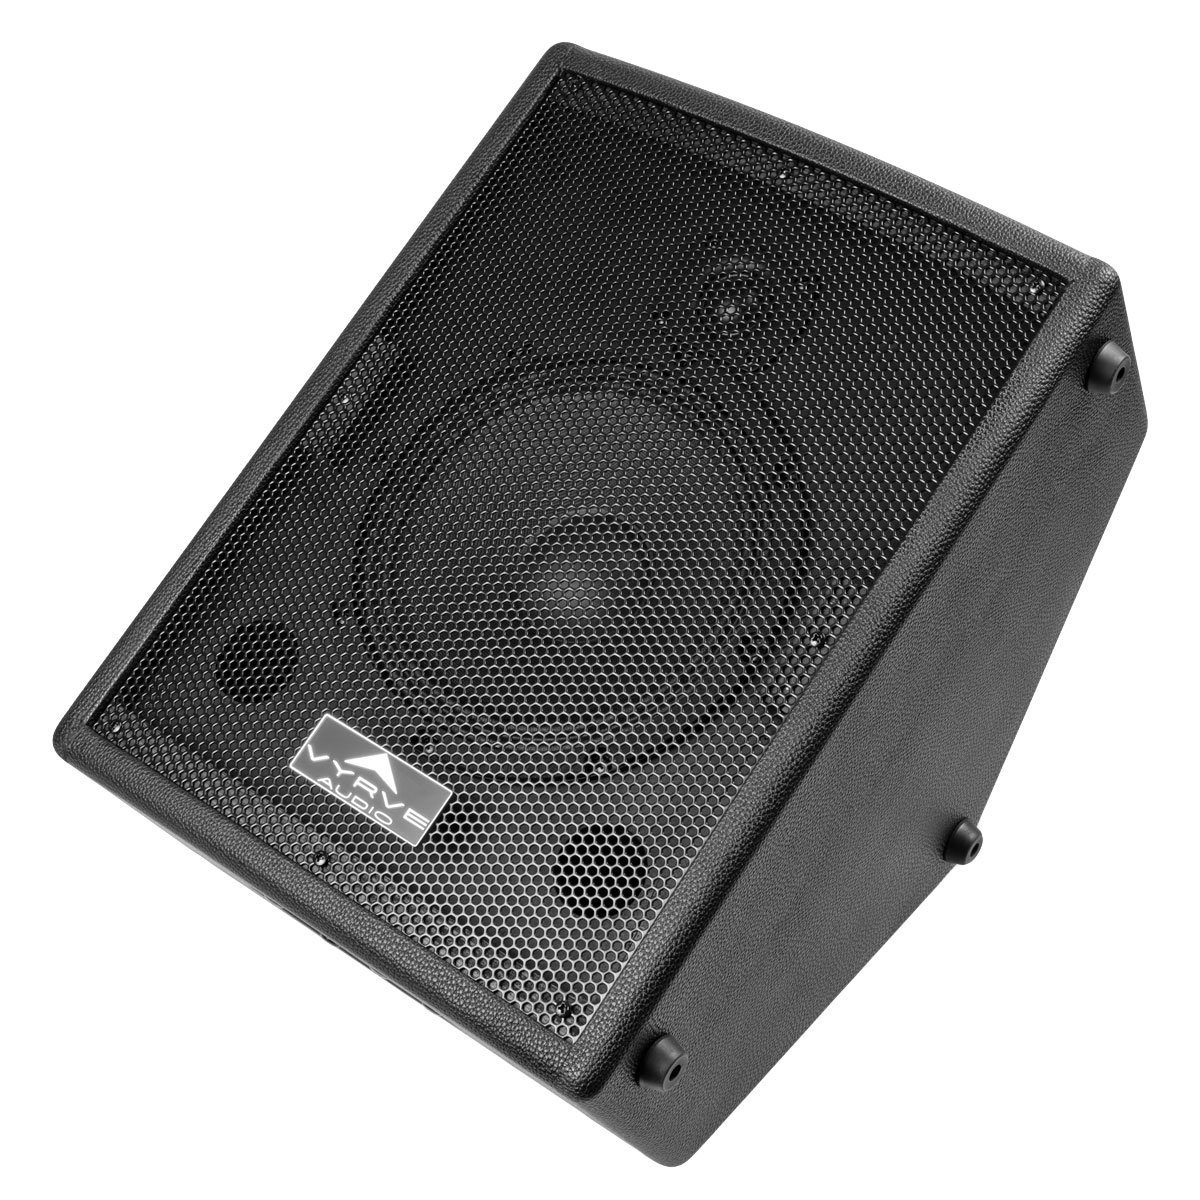 Vyrve (kein, ATRIA Lautsprecher 60 W) Aktivmonitor Audio